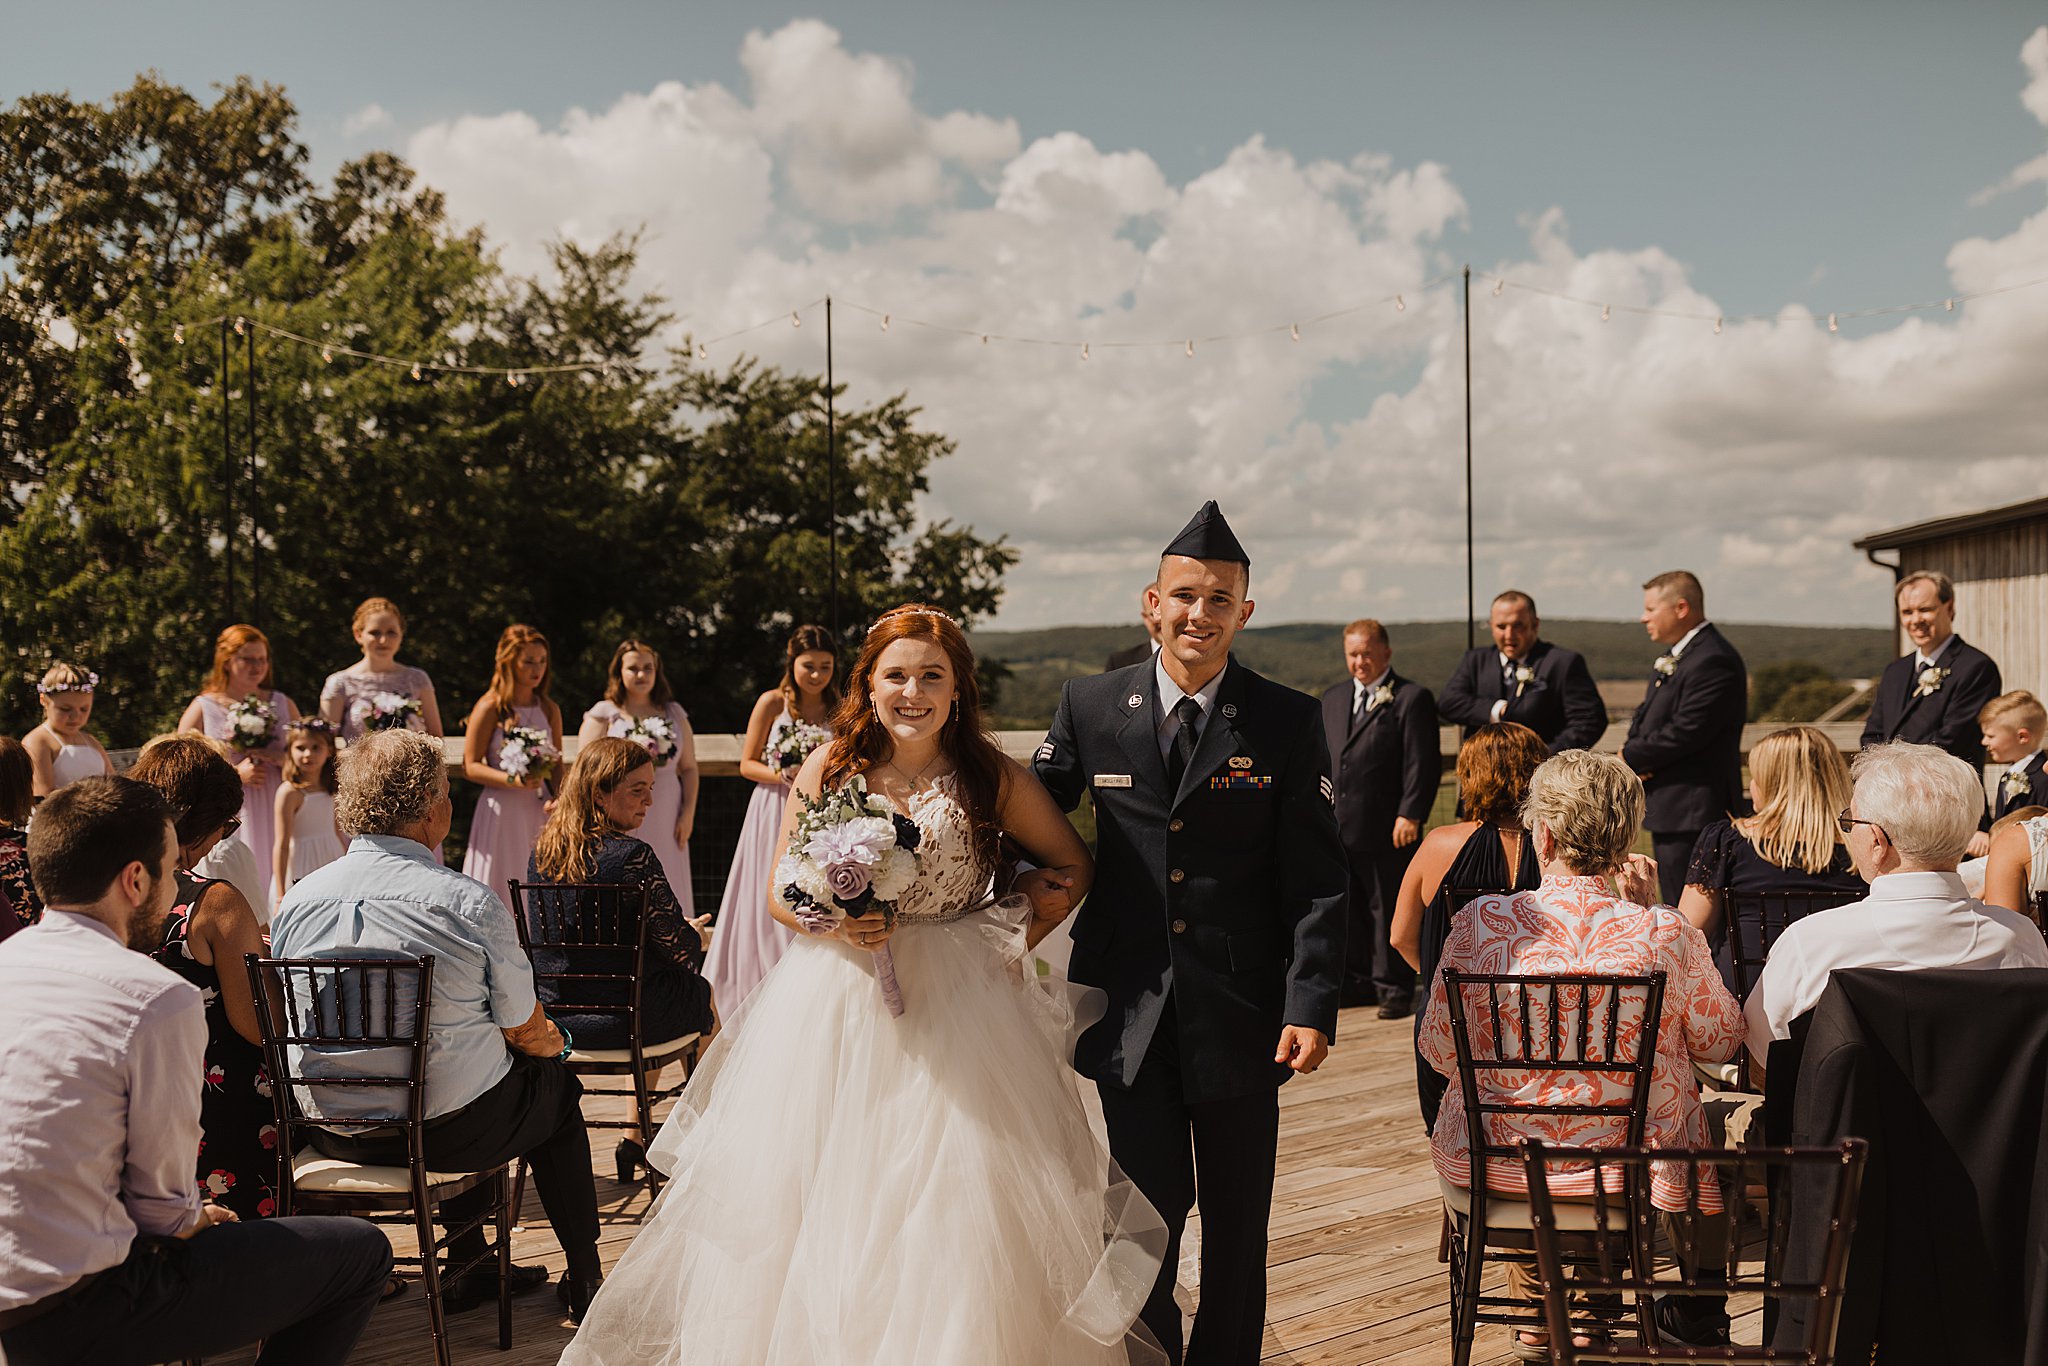 Chaumette Vineyards & Winery Wedding Ceremony | St. Louis Wedding Photographer